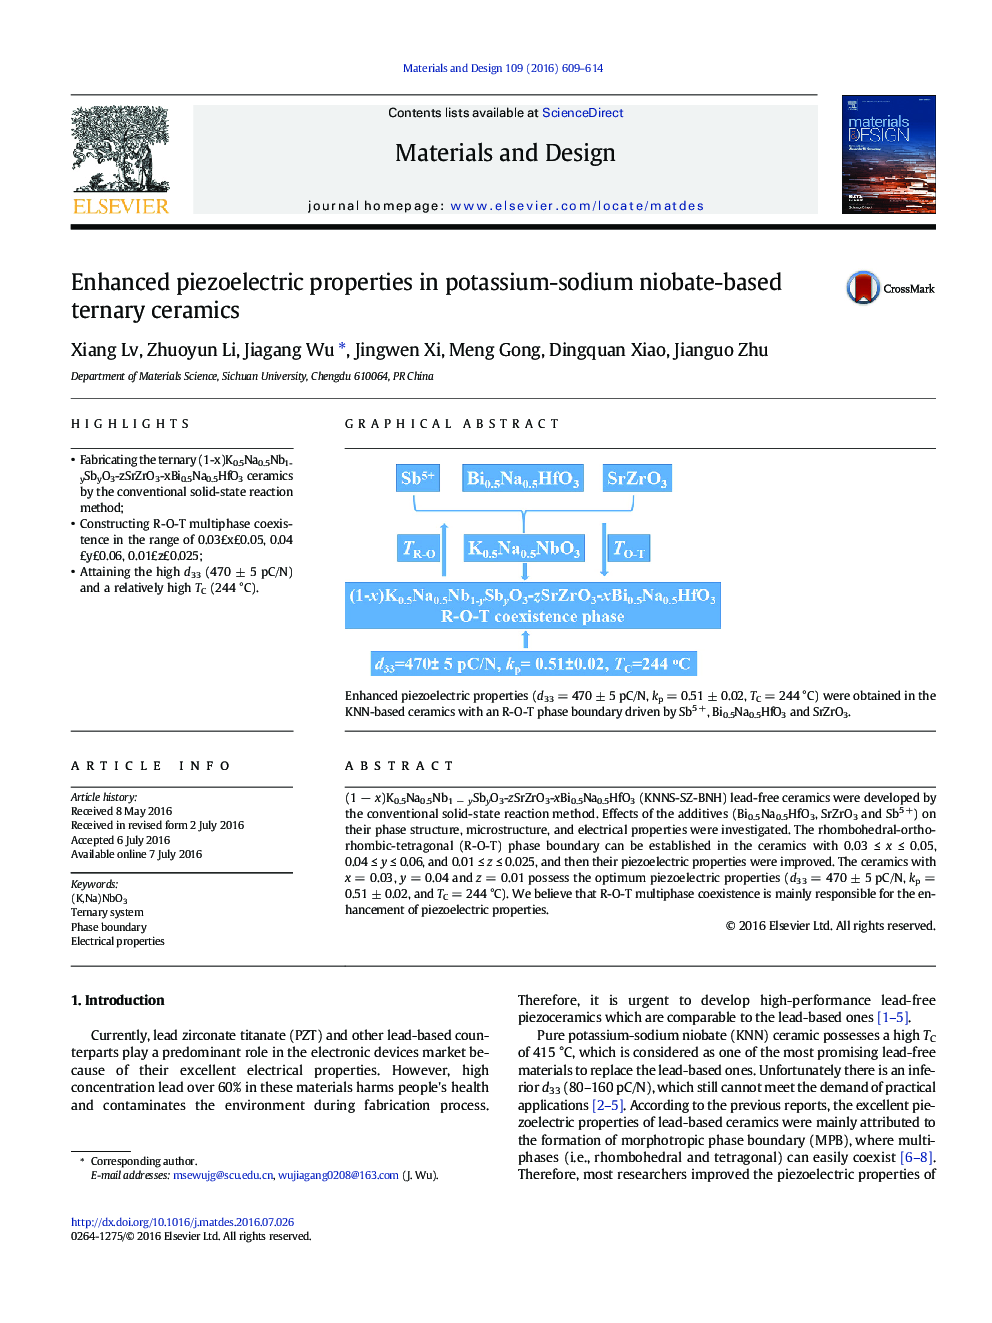 Enhanced piezoelectric properties in potassium-sodium niobate-based ternary ceramics